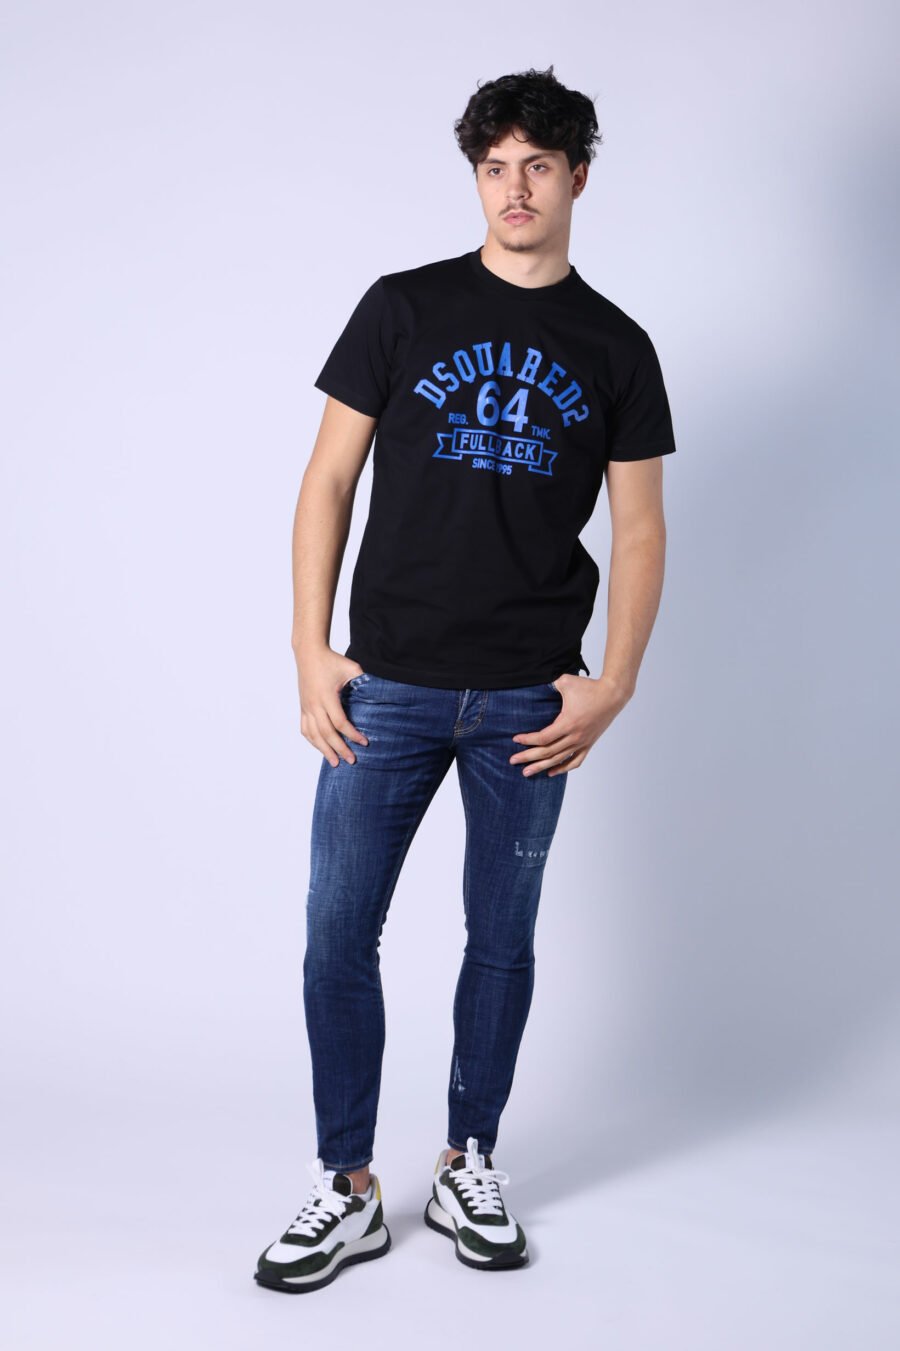 Camiseta negra con maxilogo "college" azul - Untitled Catalog 05348